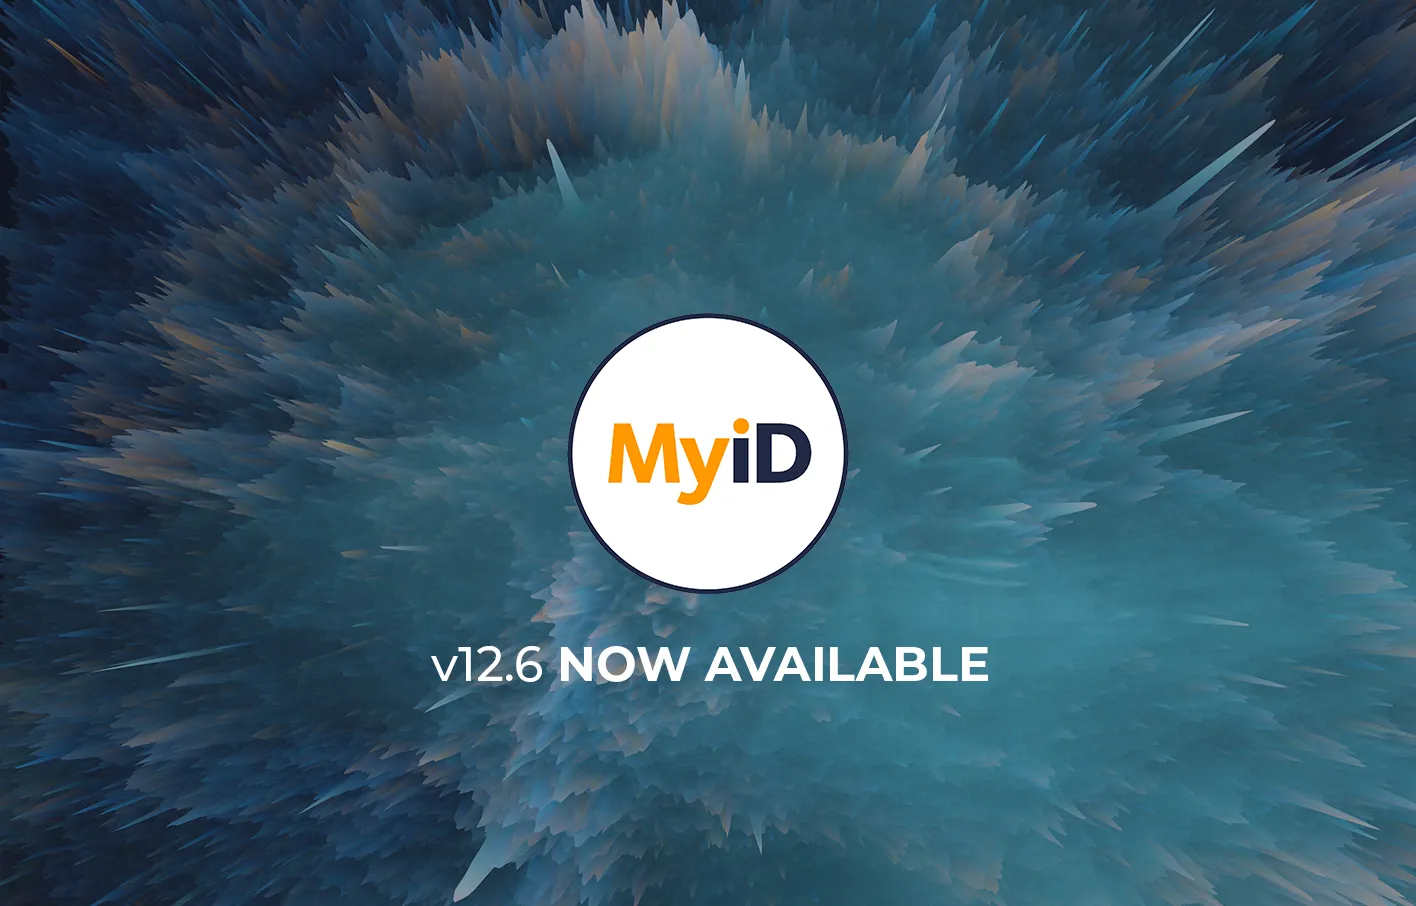 Banner for MyID release V12.6